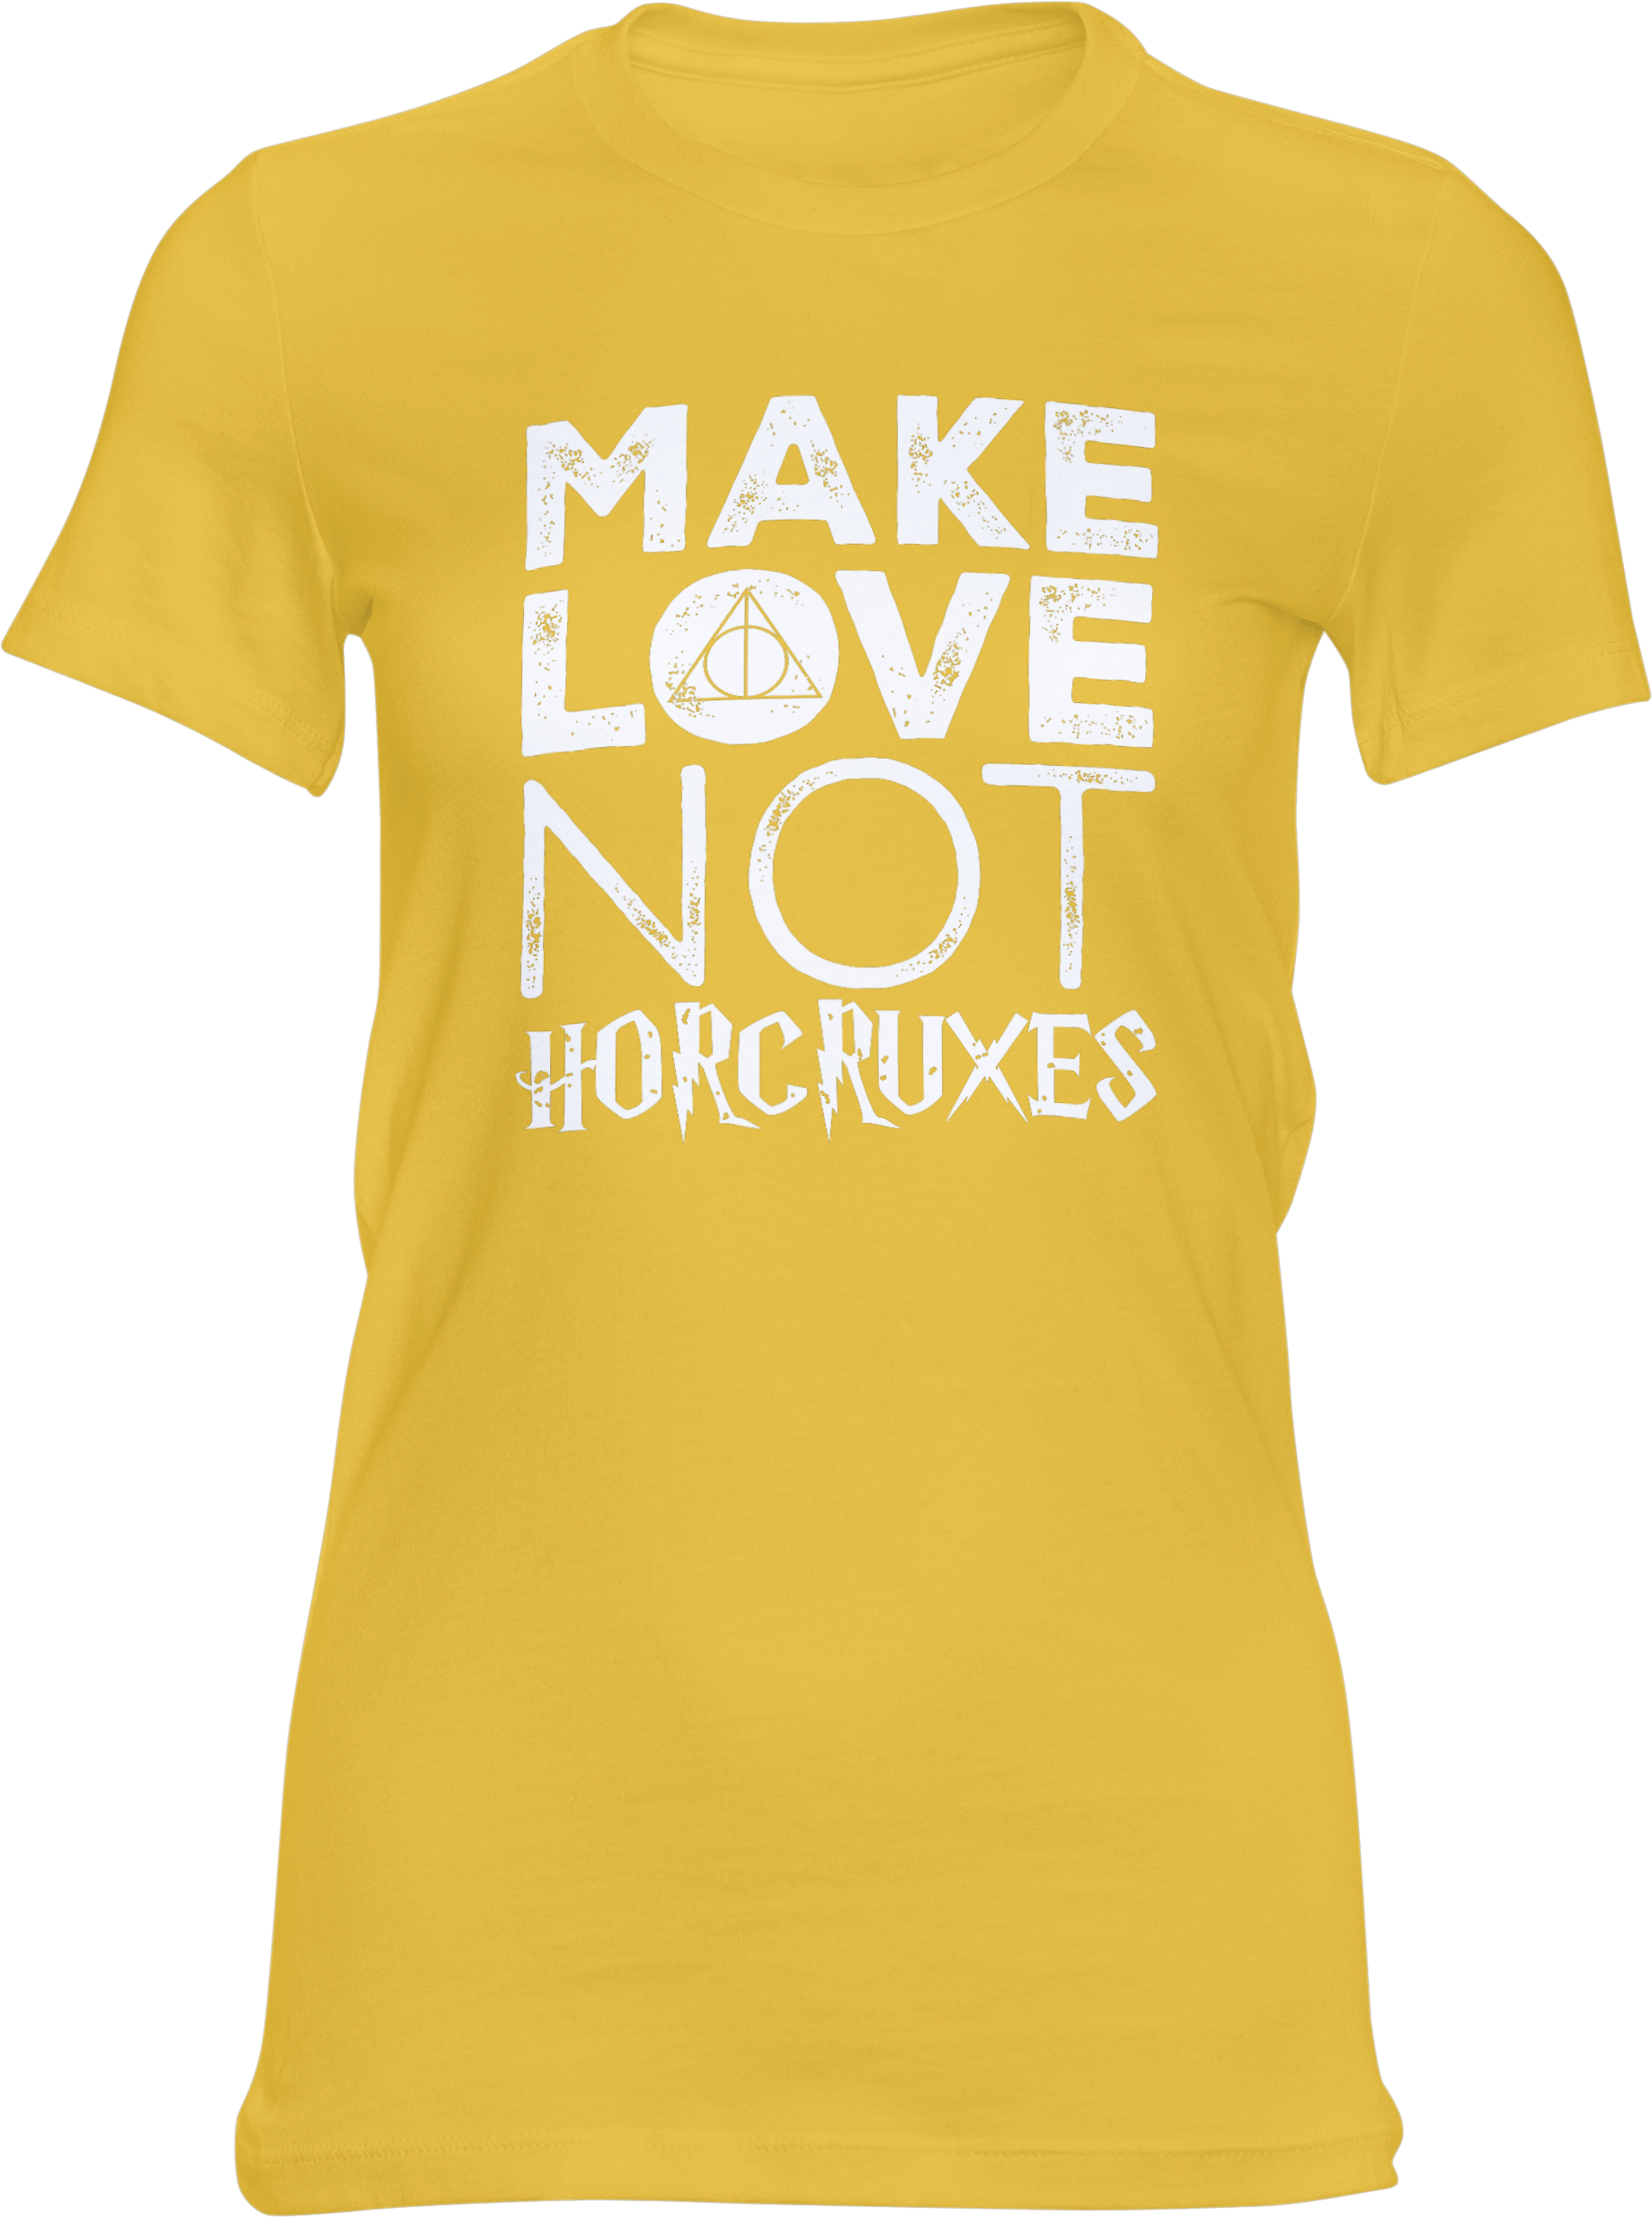 Motiv-Shirt – Make Love Not Horcruxes – Girlie-Shirt (gelb)